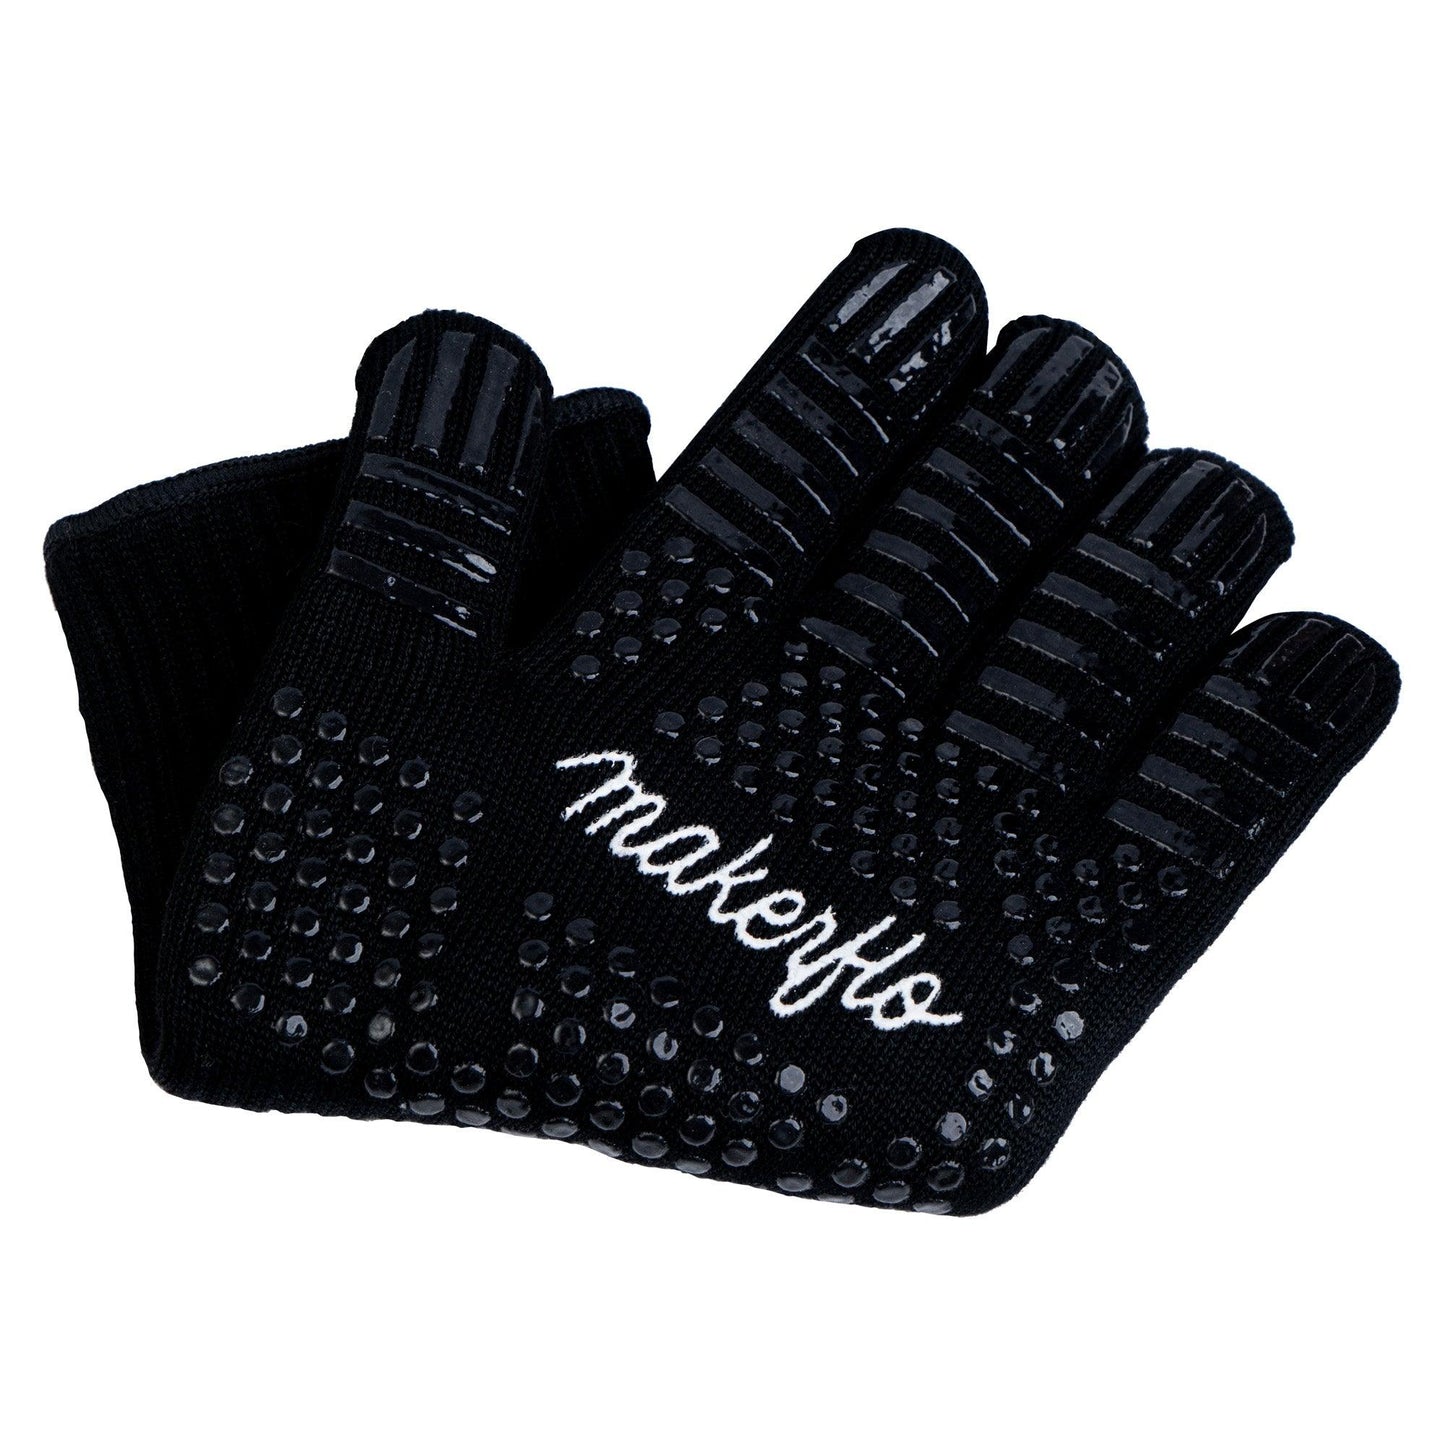 MakerFlo Heat Resistant Glove - Ambidextrous